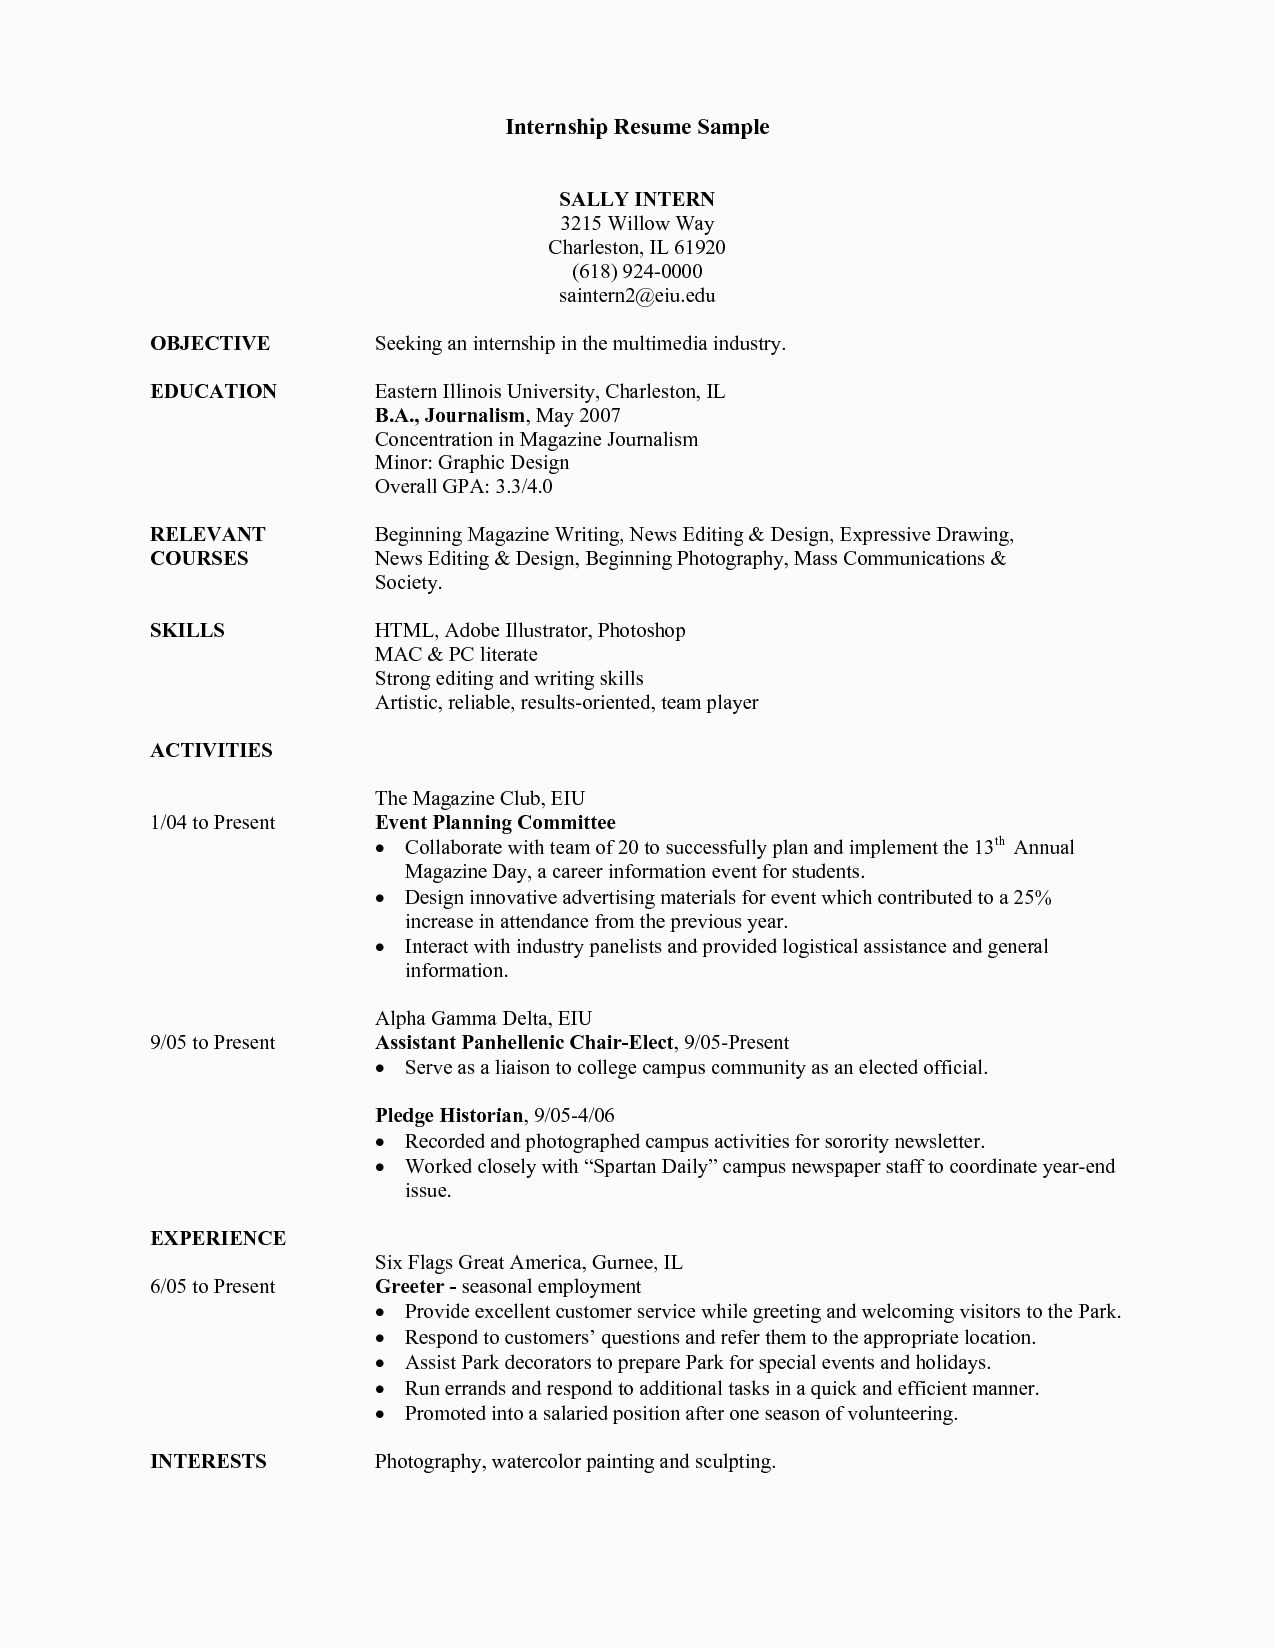 Sample Resume for College Student Applying for Internship Student Resume Example Sample College Internship Samples